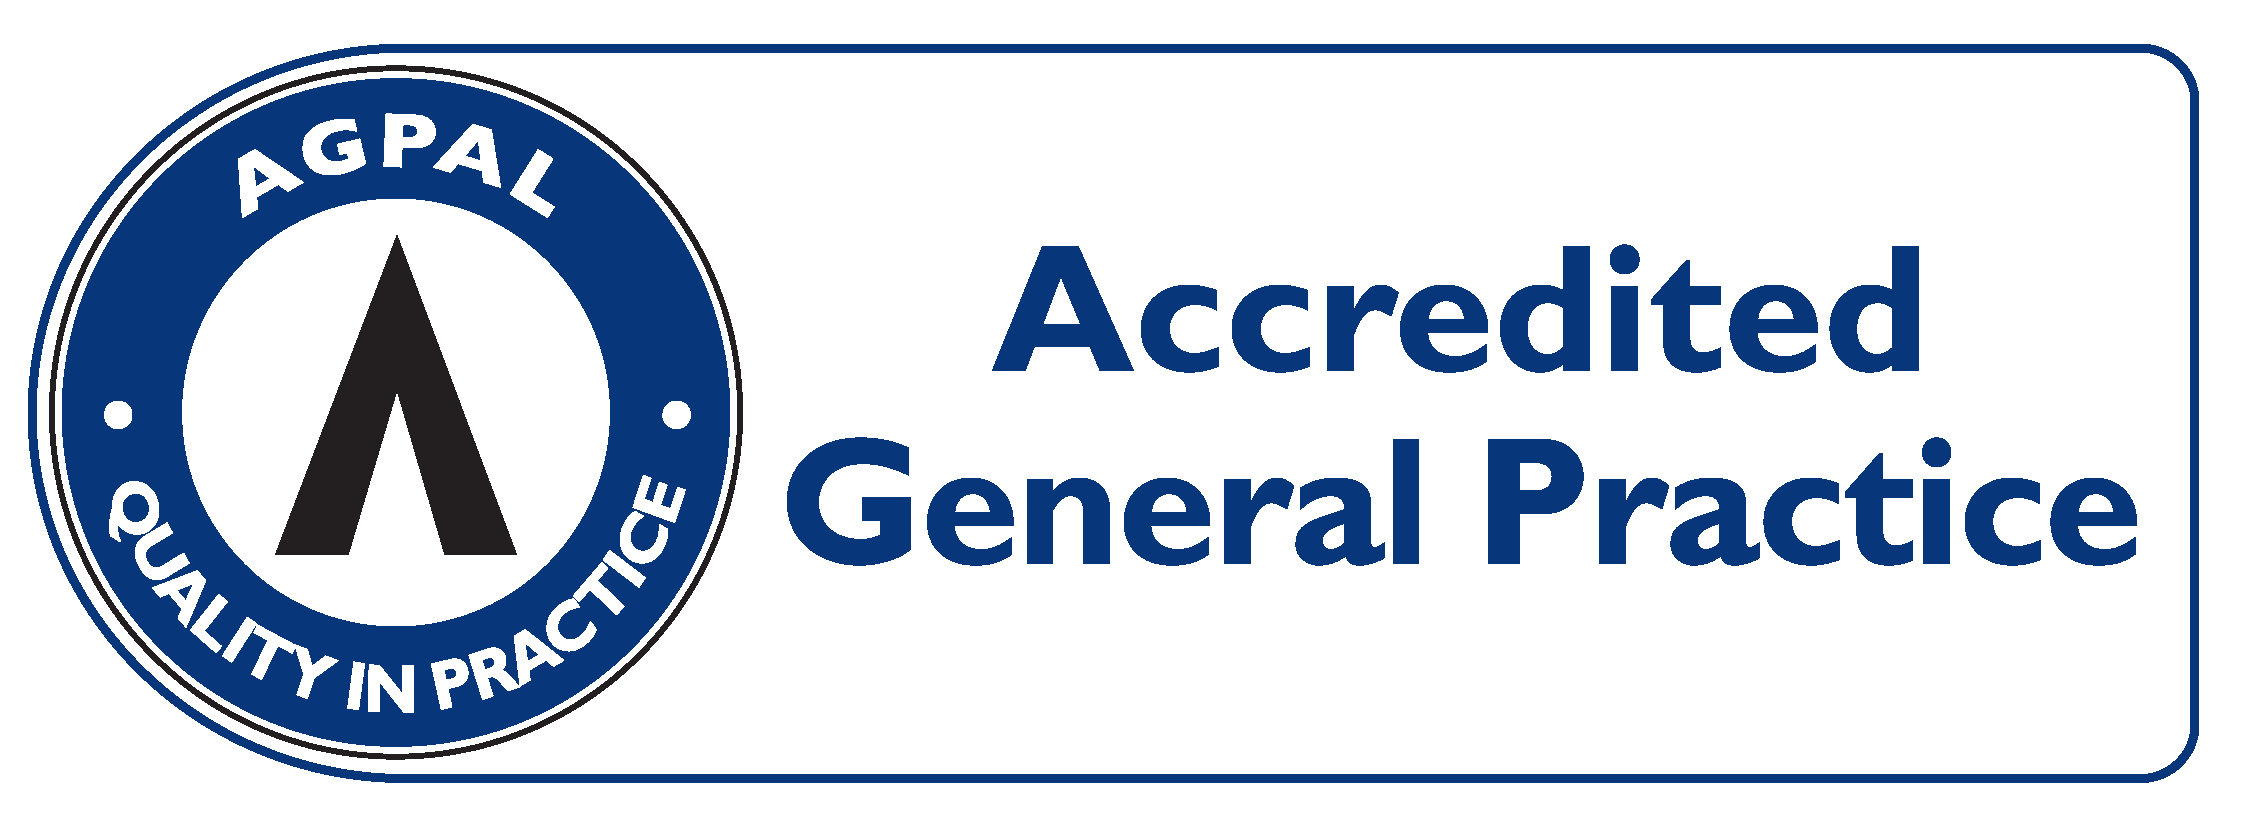 AGPAL-General-Practice.png